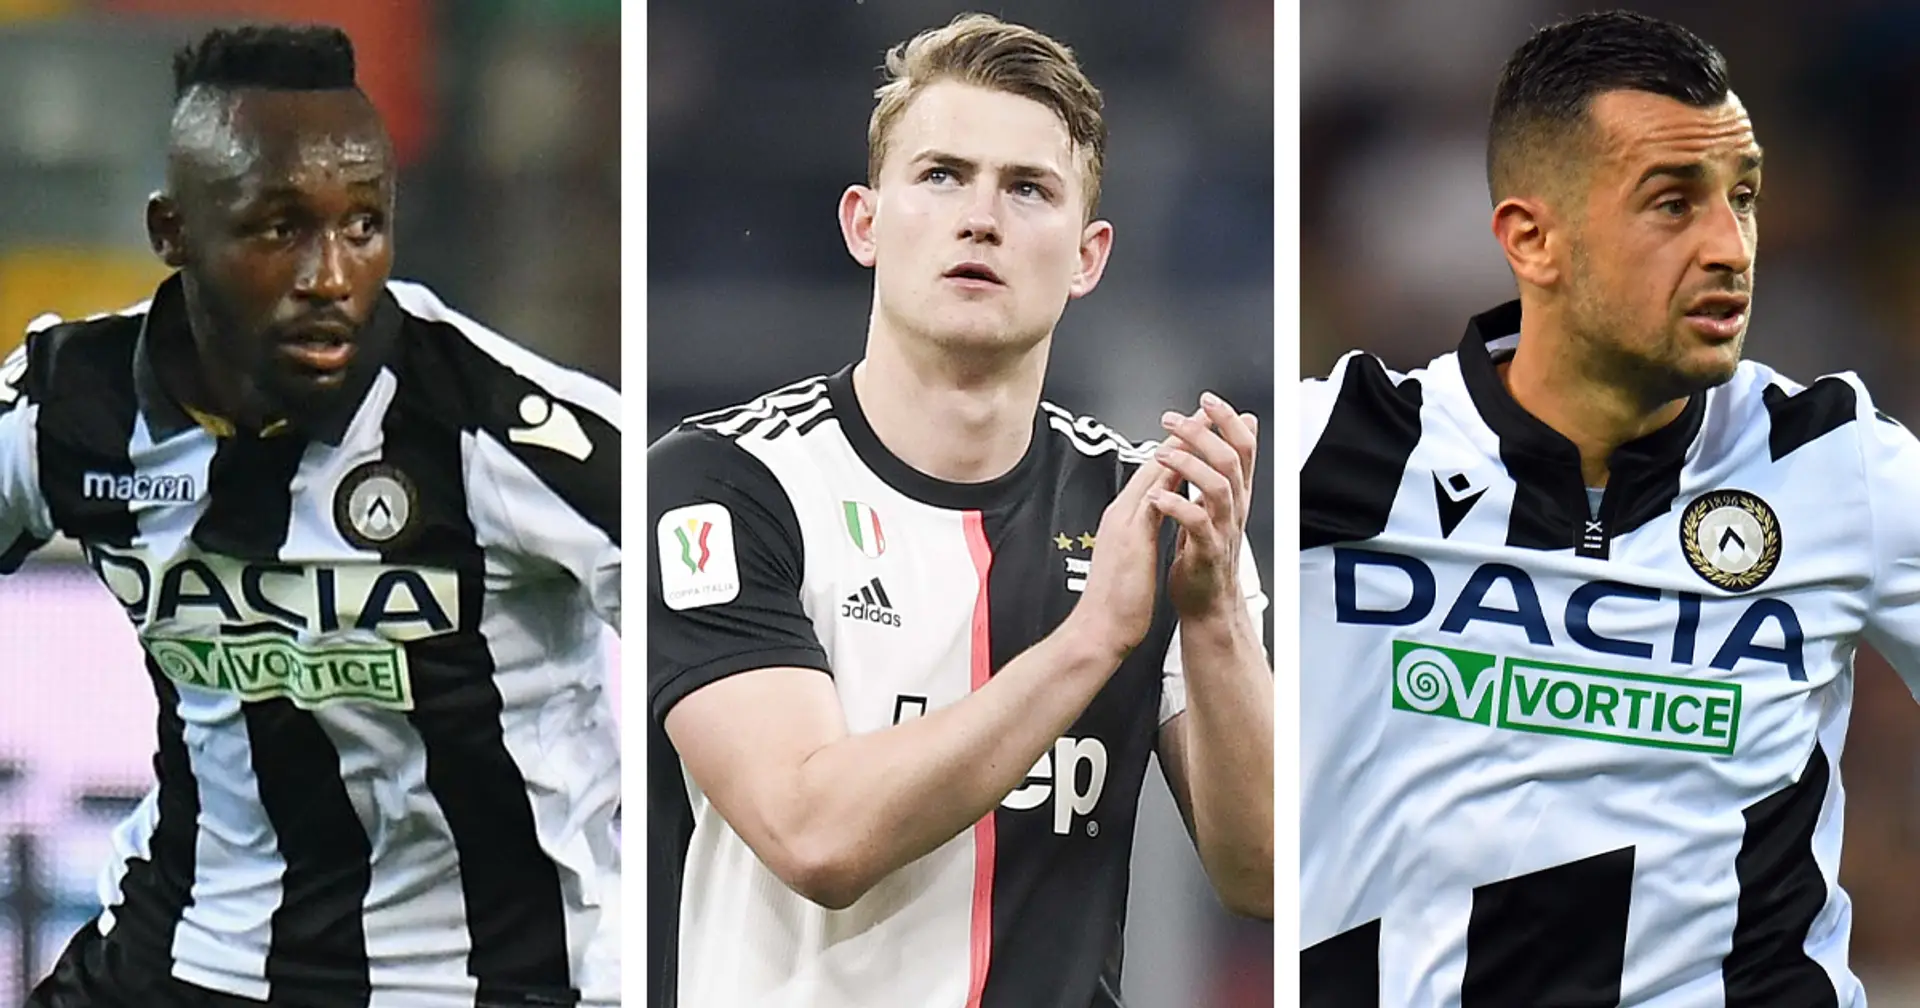 De Ligt illude la Juventus, Nestorovski e Fofana la puniscono: il match riassunto in 5 punti chiave 